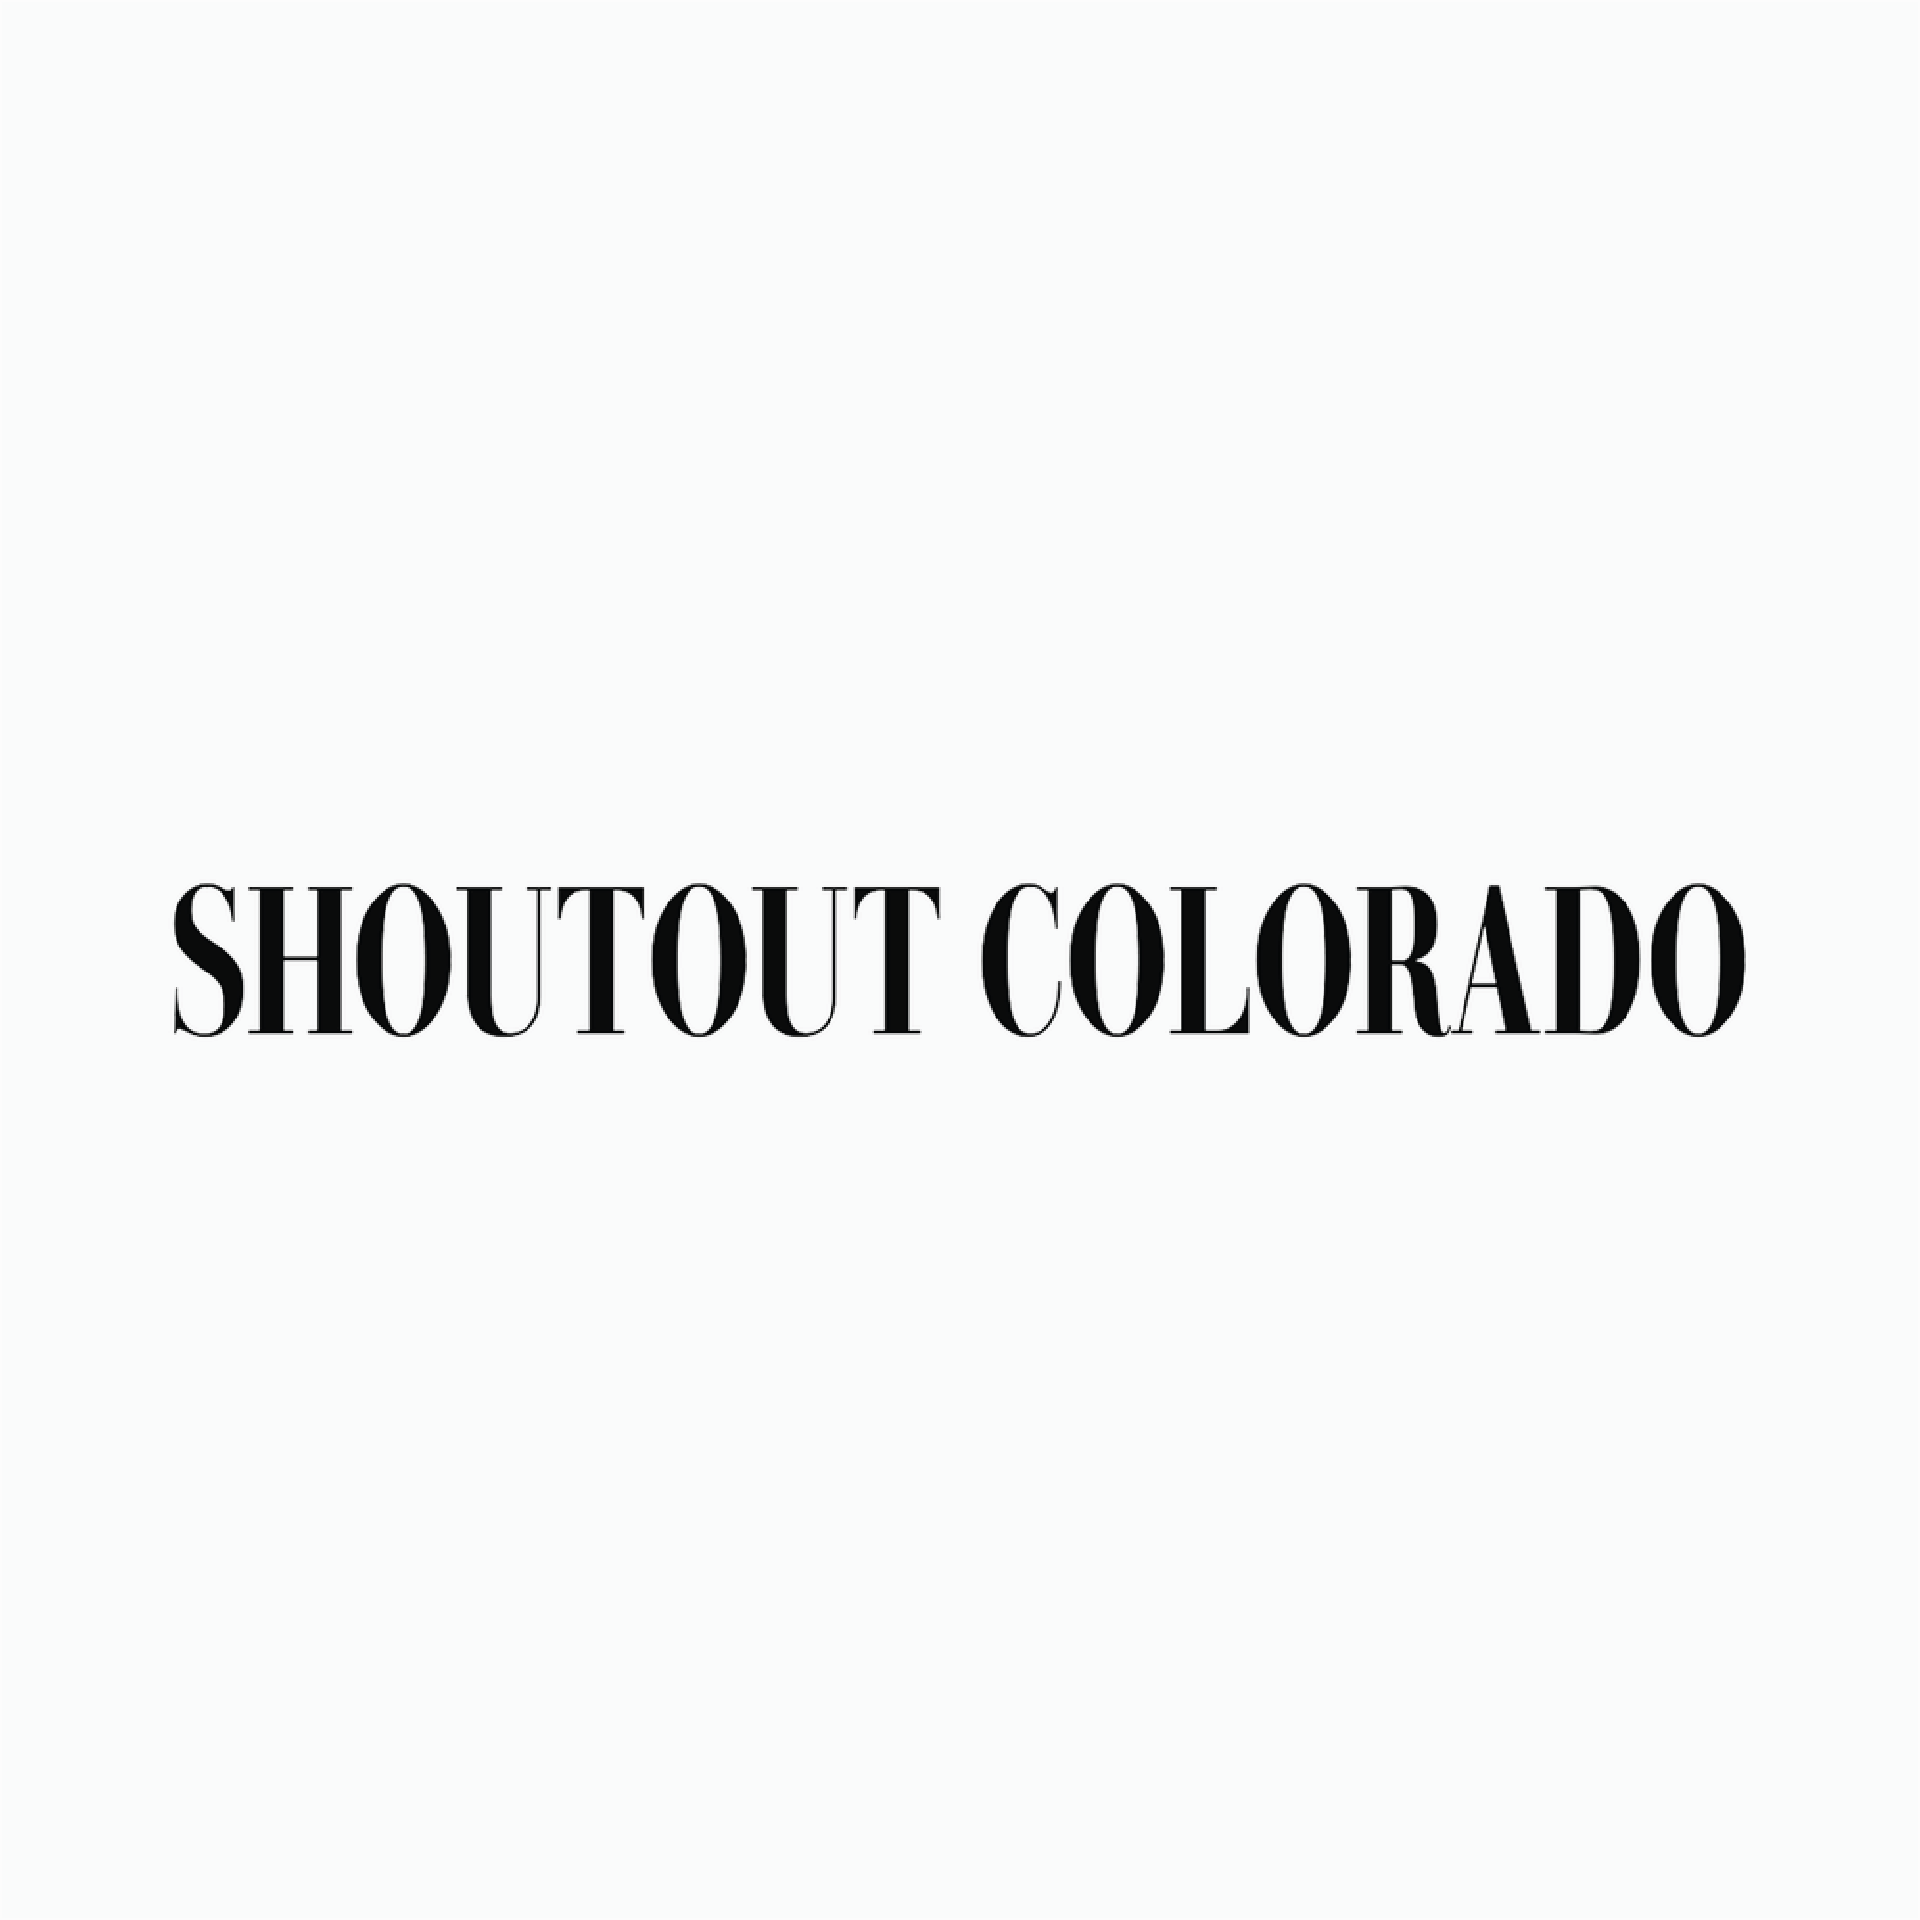 Shoutout Colorado